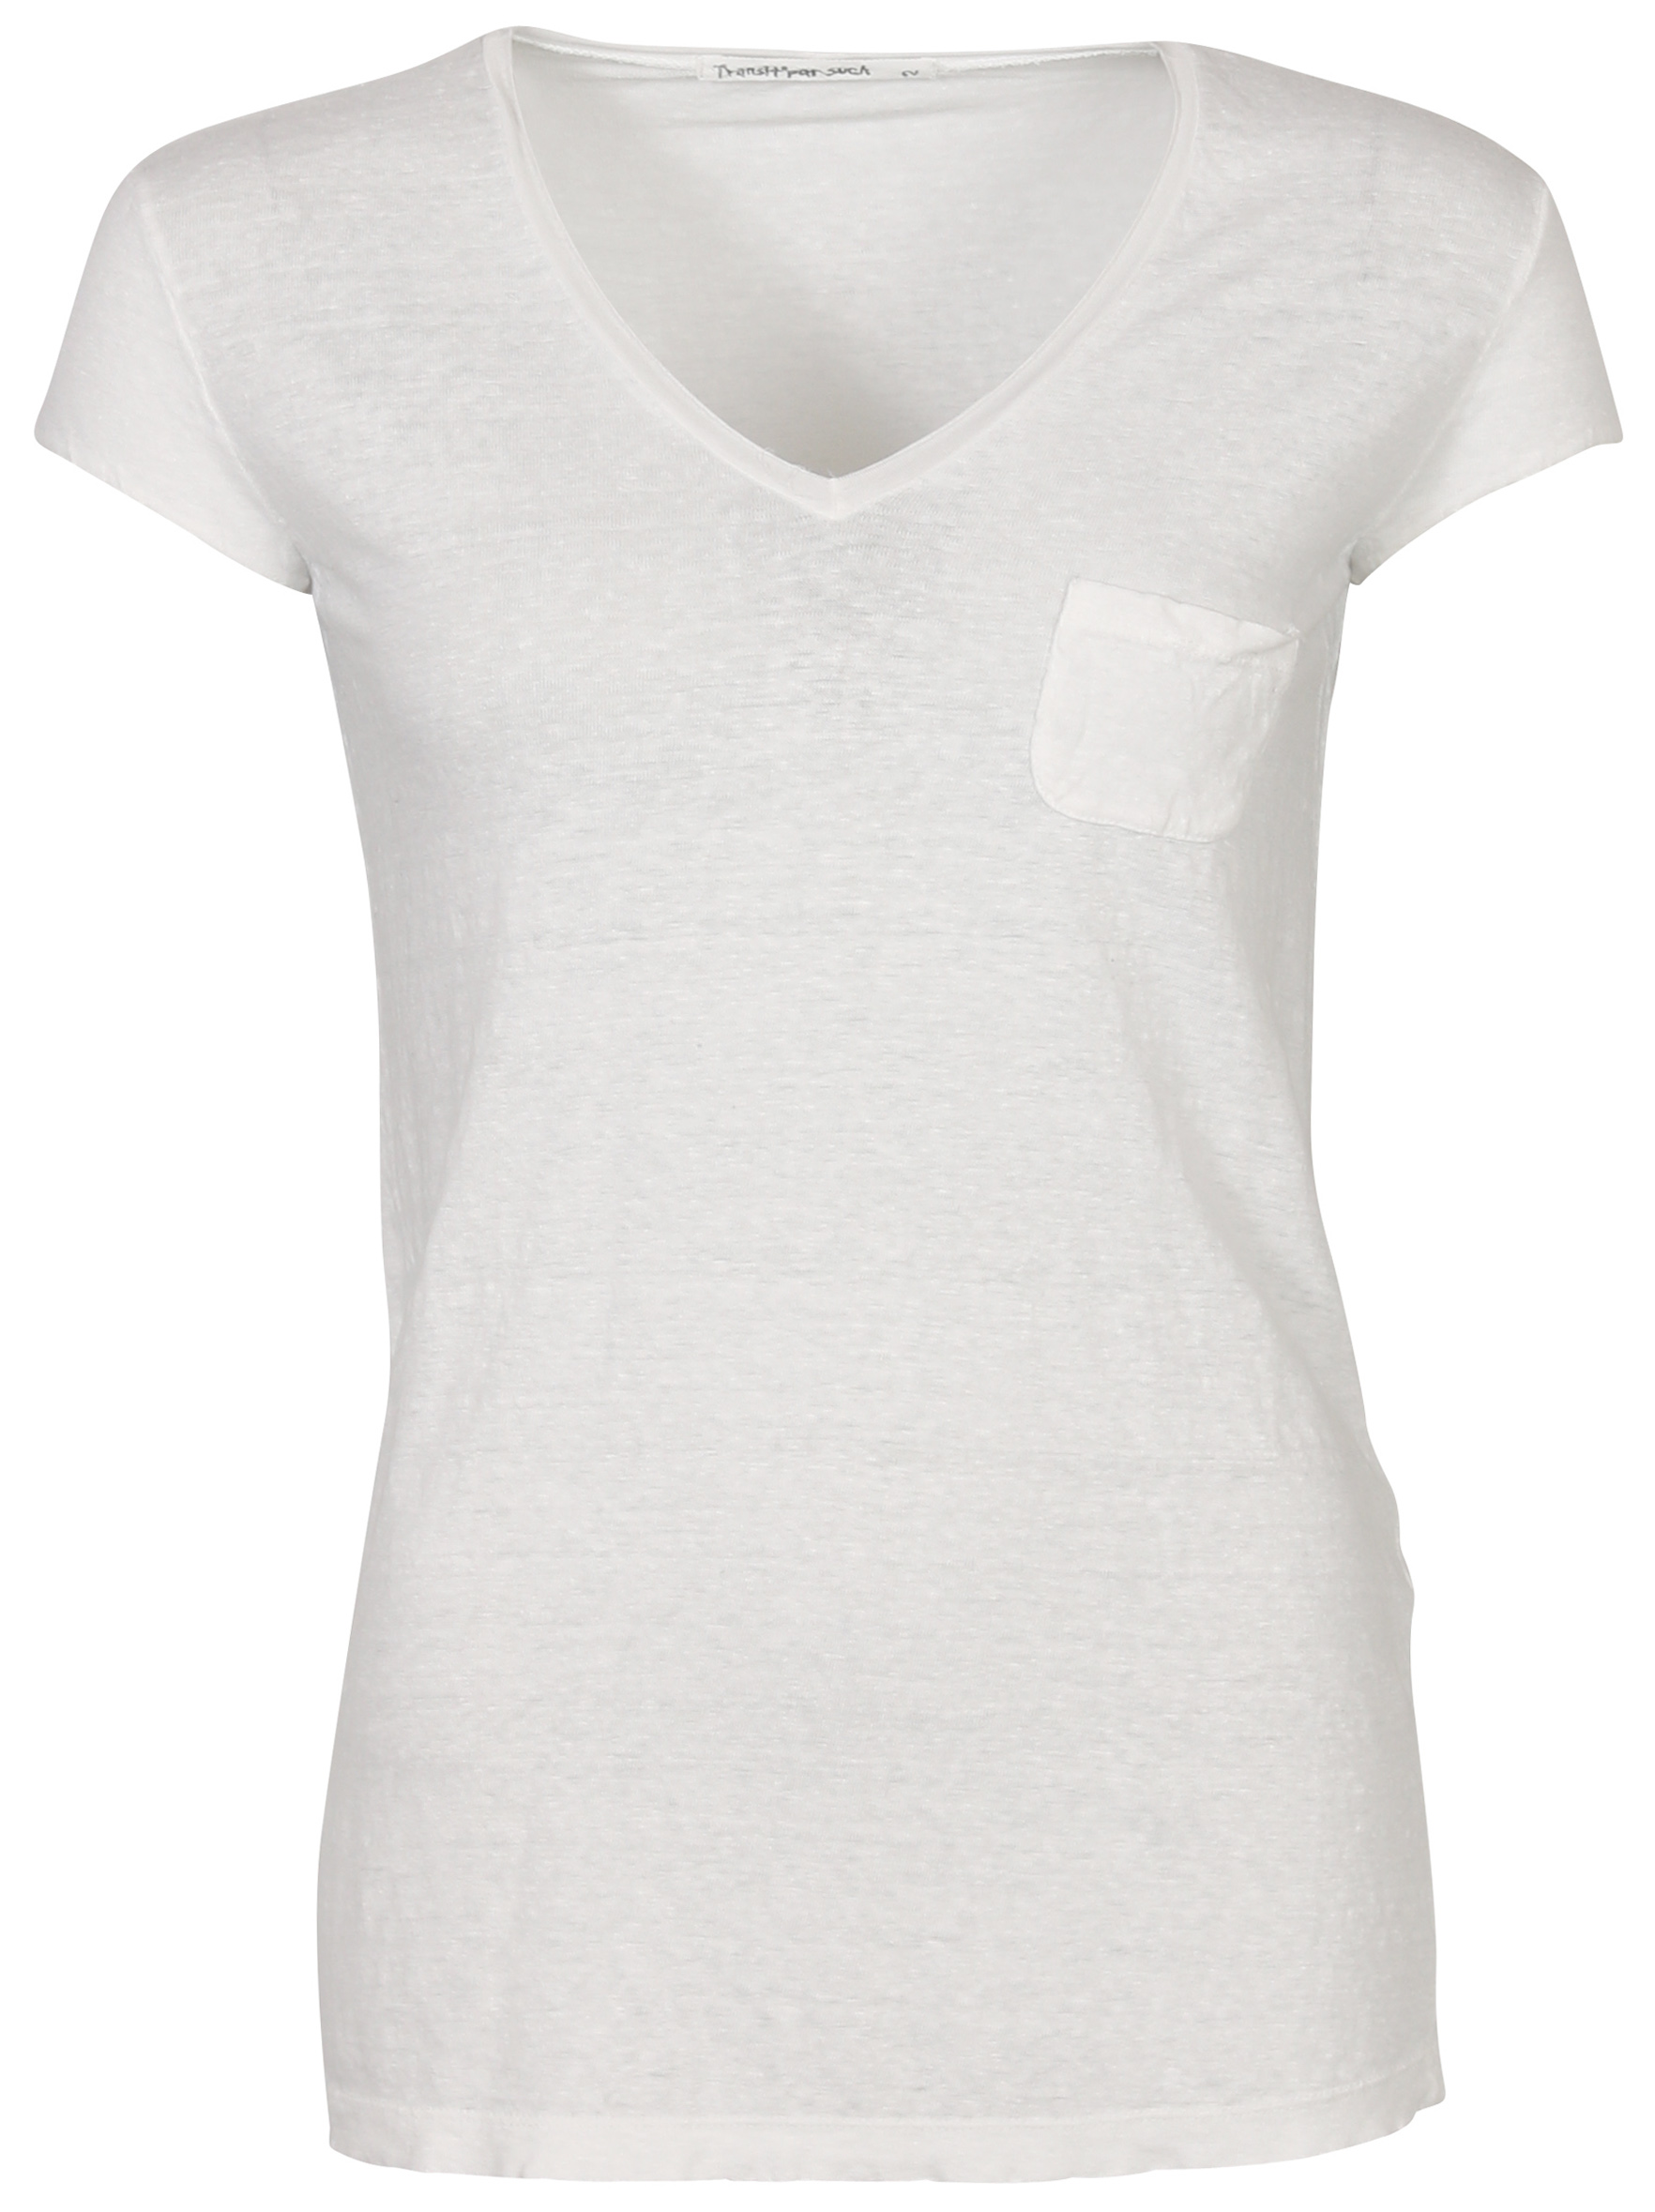 Transit T-Shirt White Linen